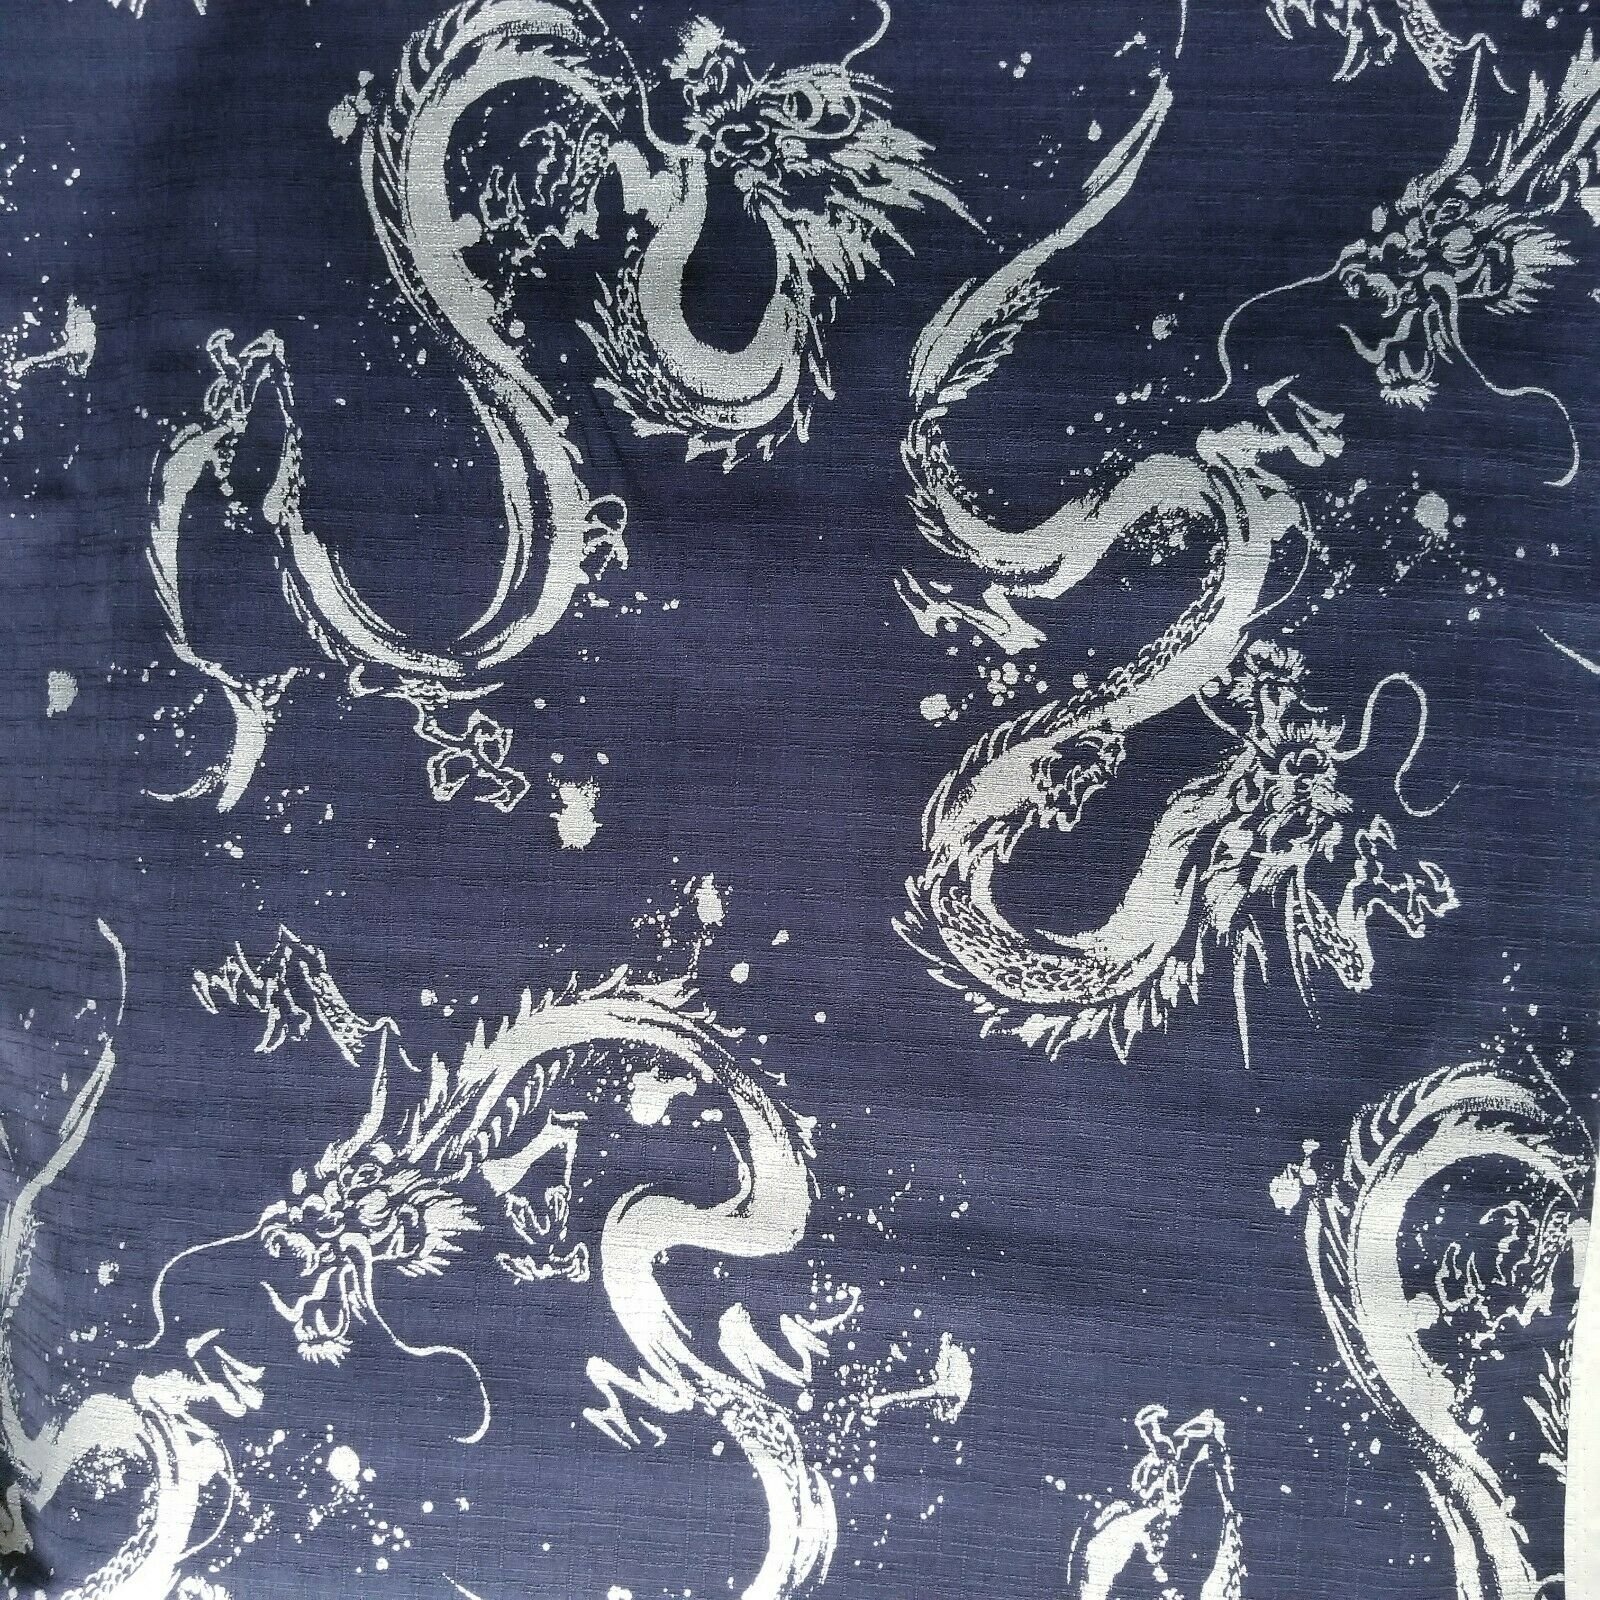 japanese dragon fabric